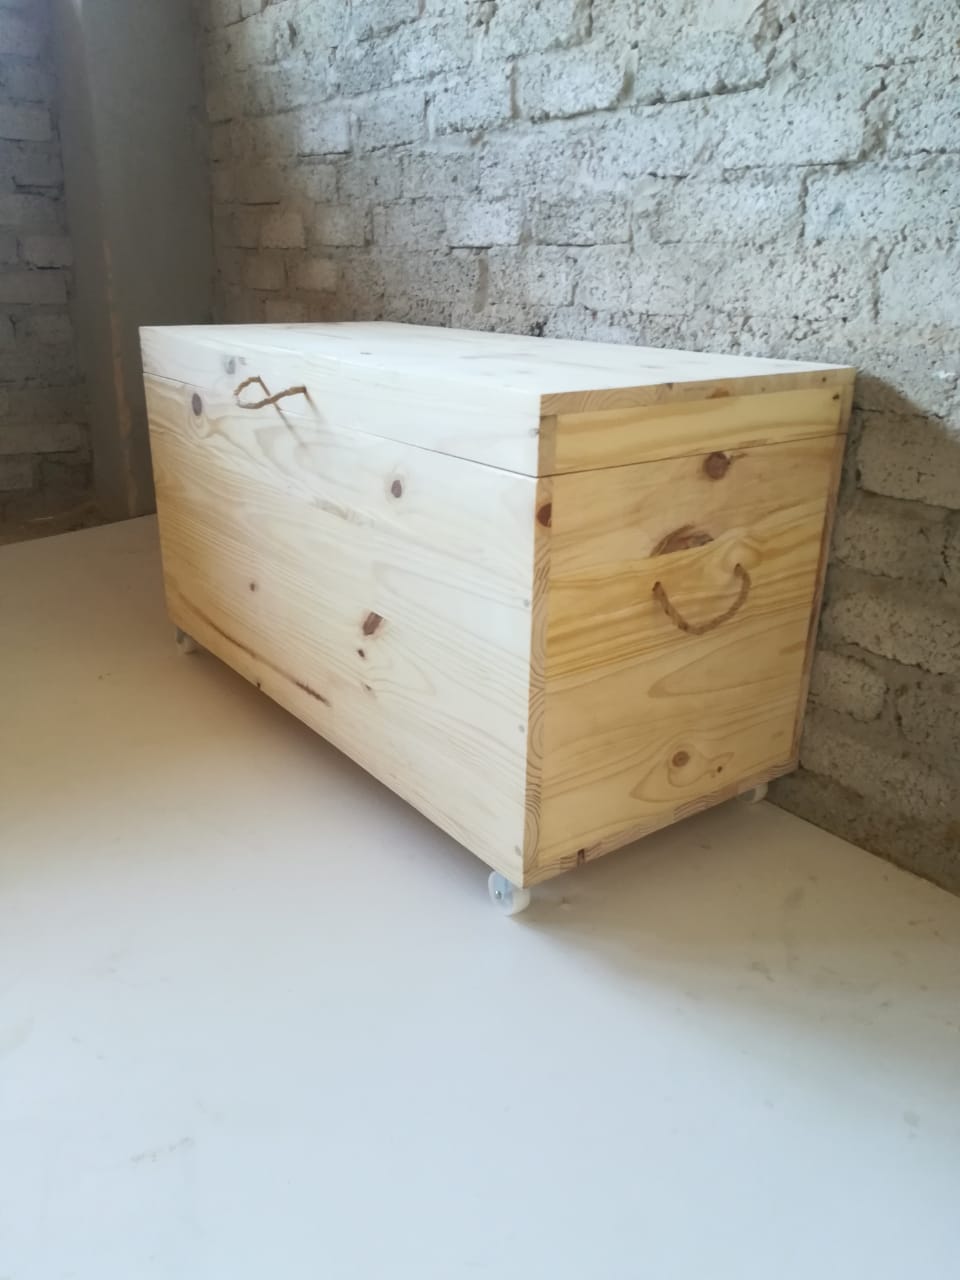 Toy/Storage Box On Wheels - Furniture